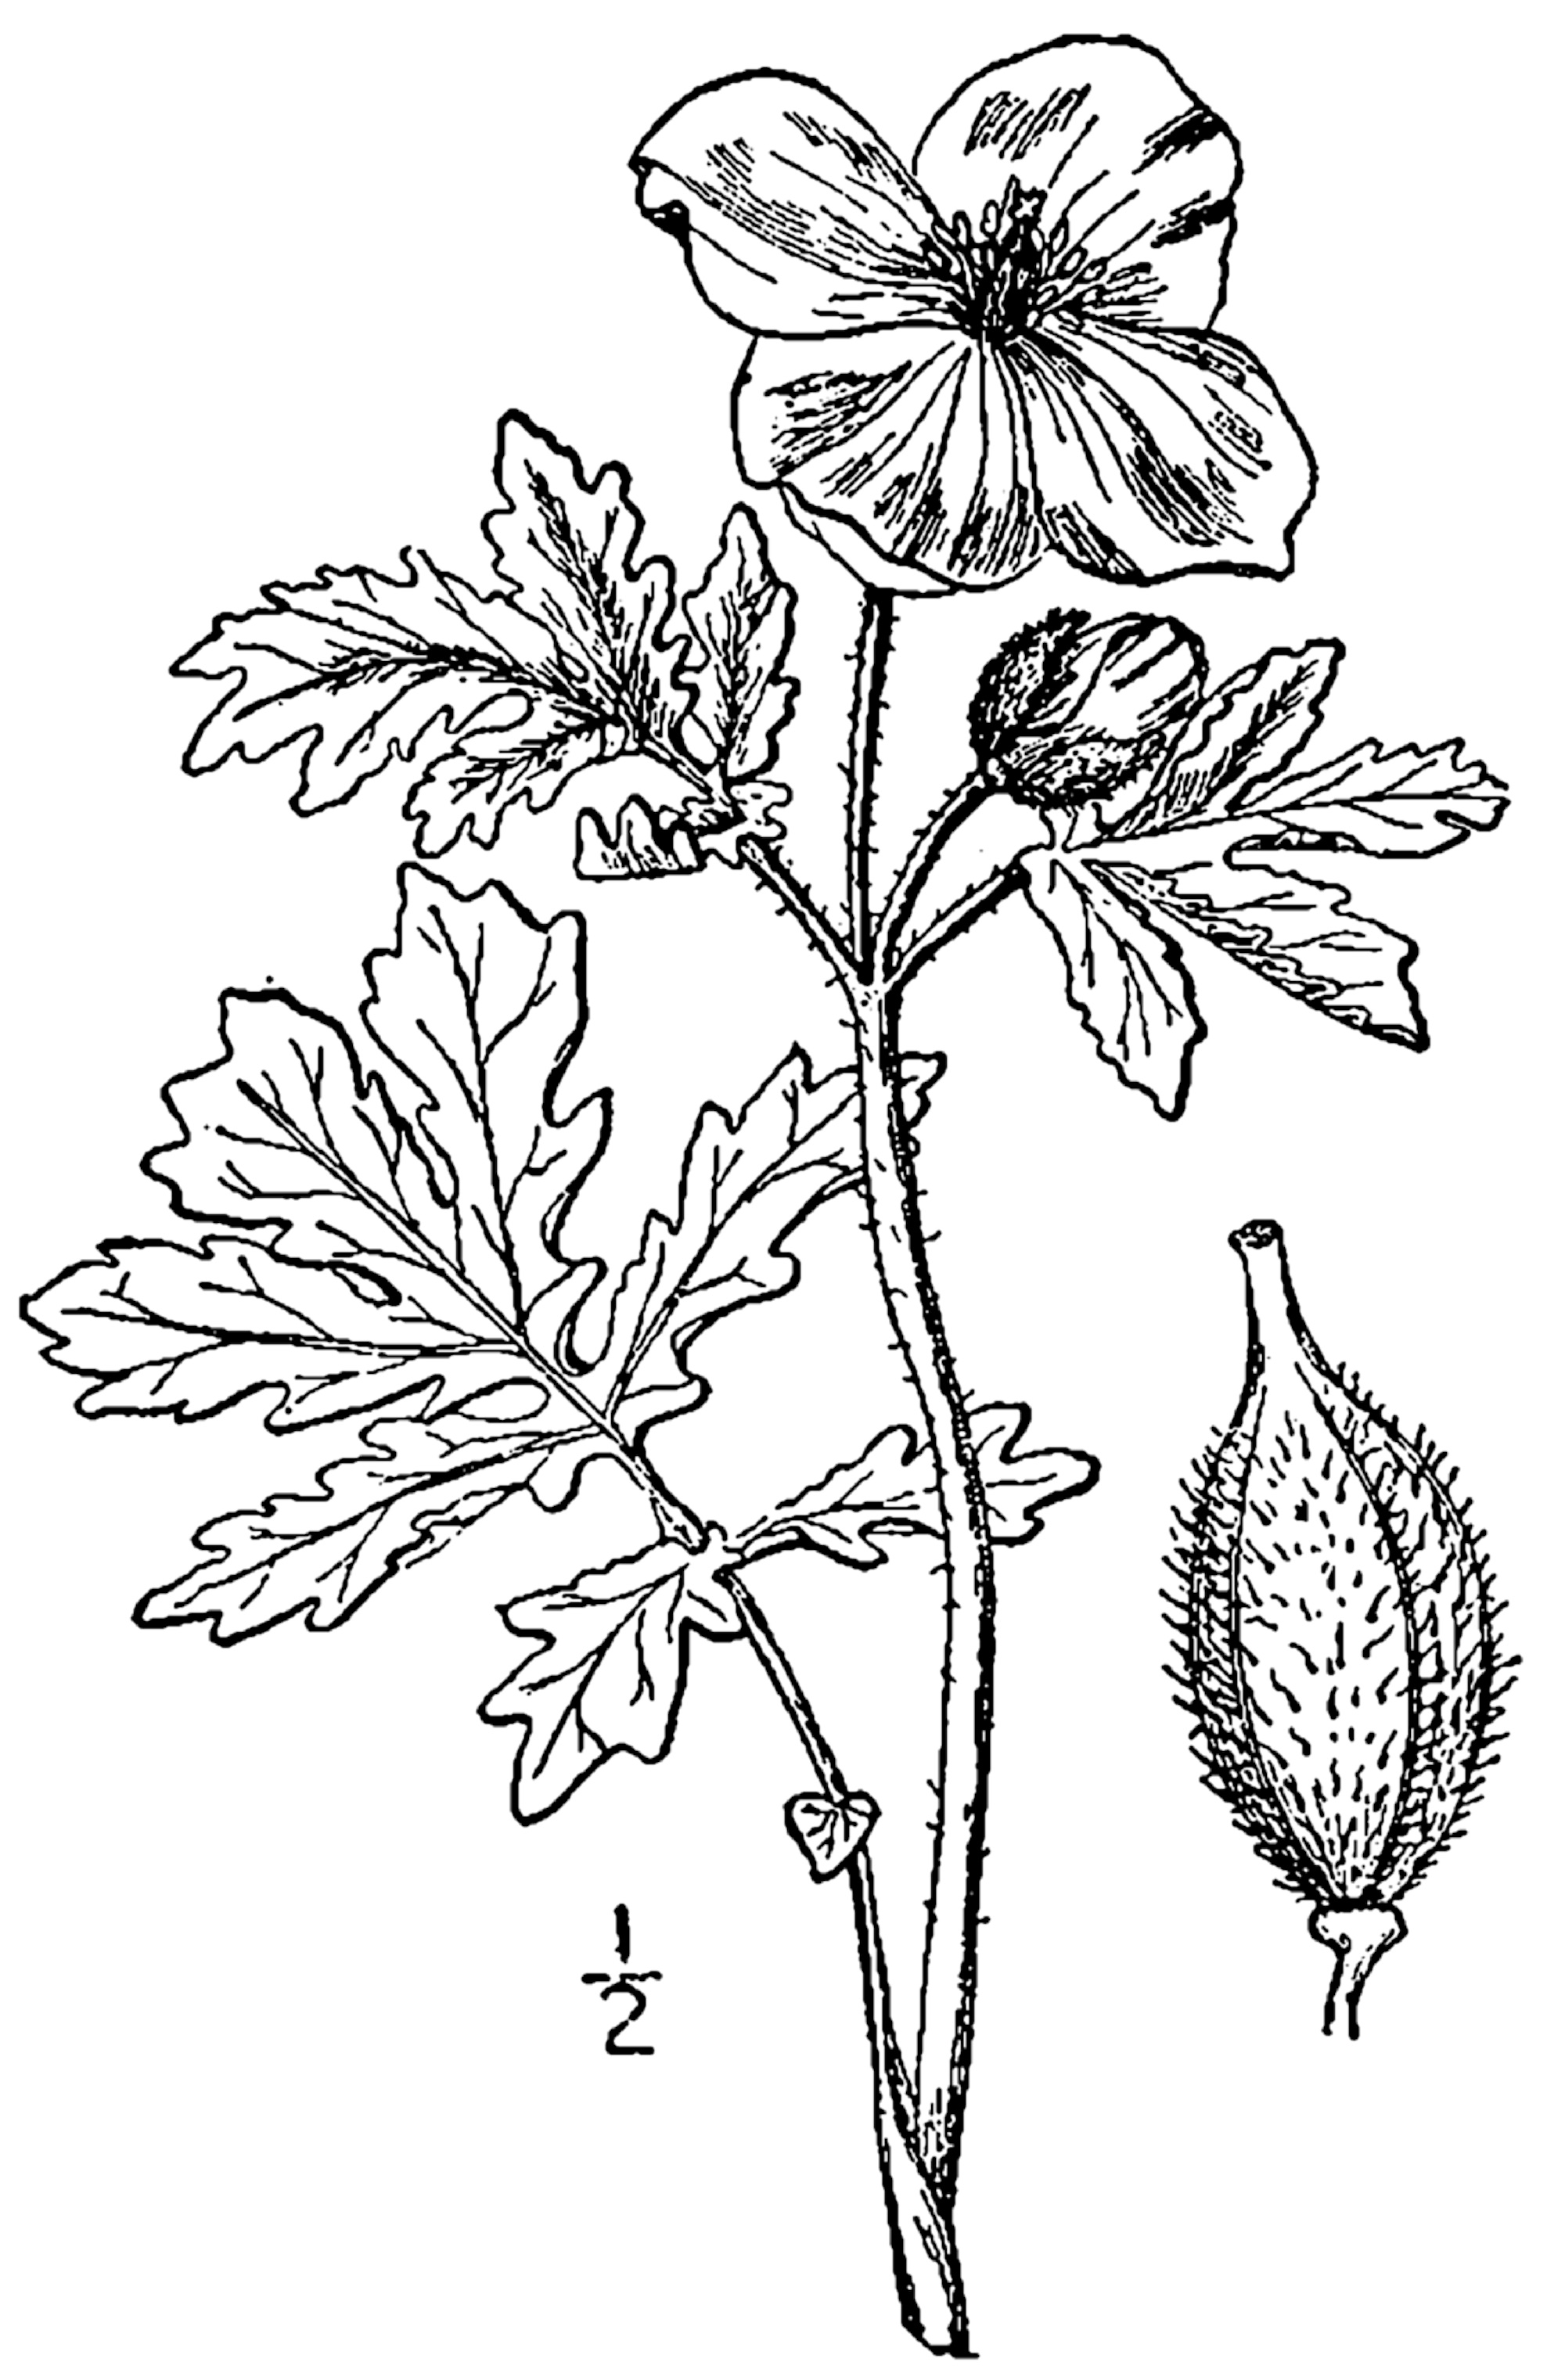 1913 Celandine Poppy botanical illustration.